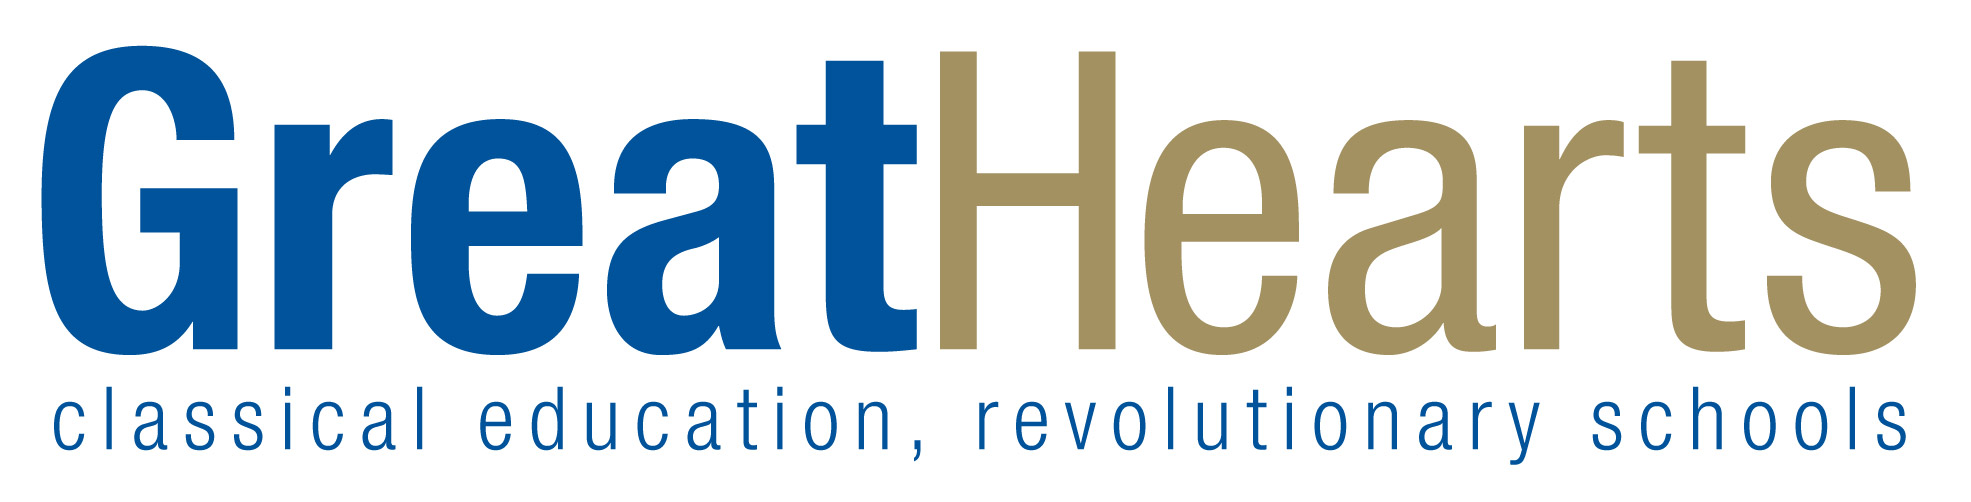 GreatHearts logo - BLUE & GOLD-01